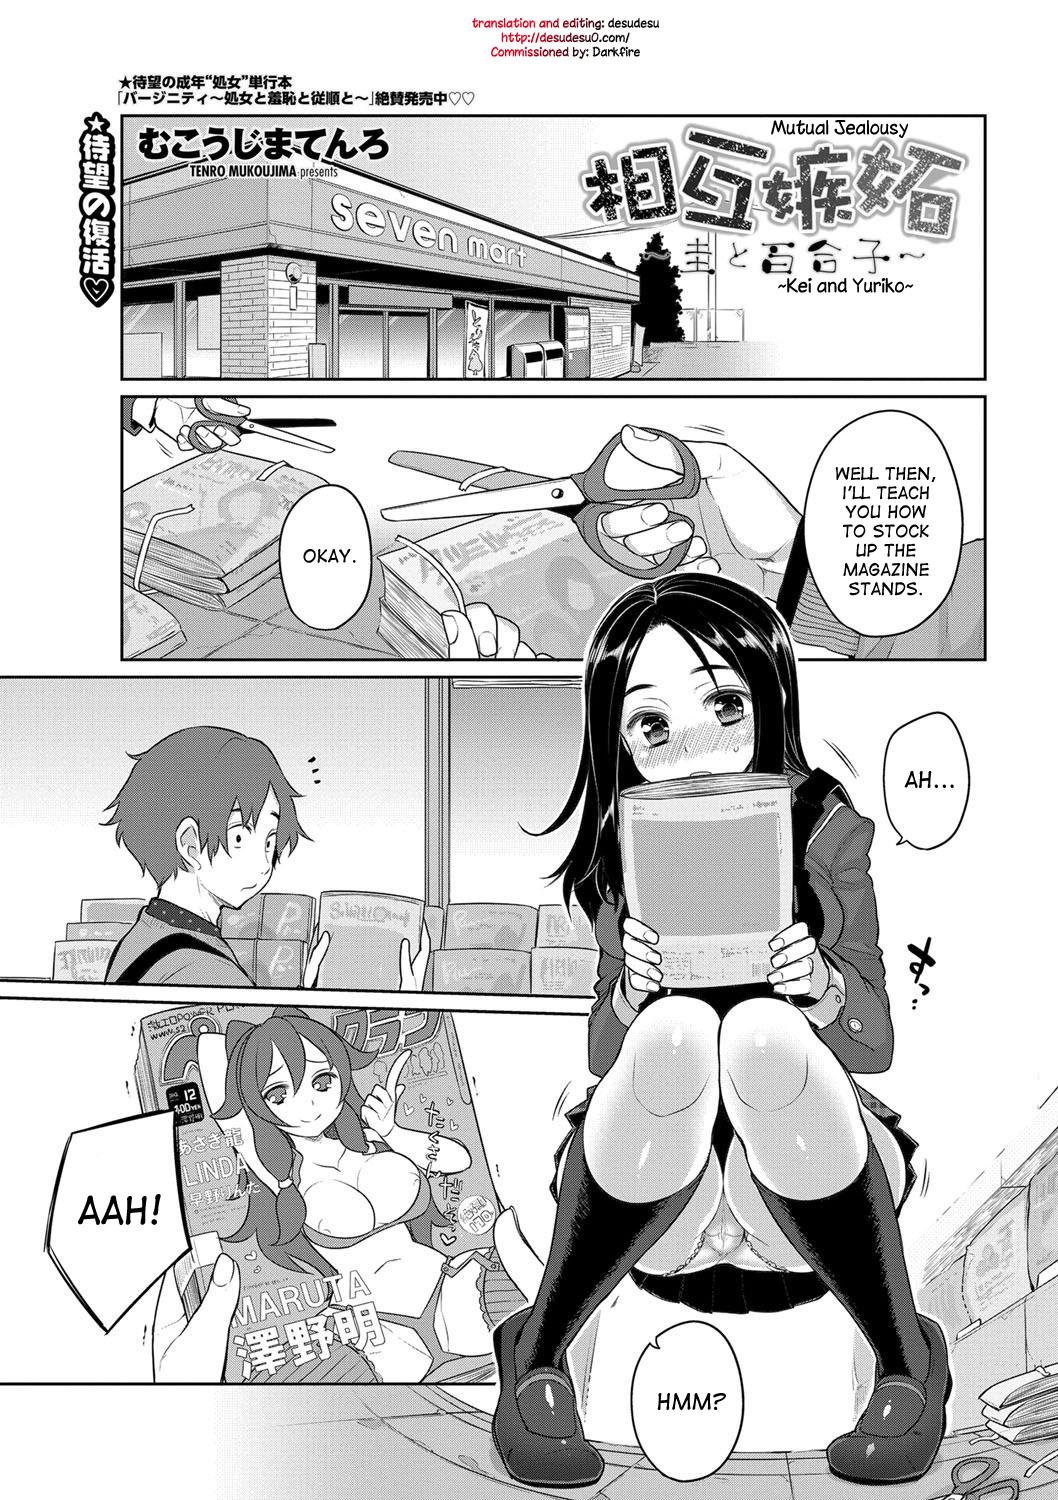 Police Mutual Jealousy - Kei and Yuriko Girl Girl - Page 1